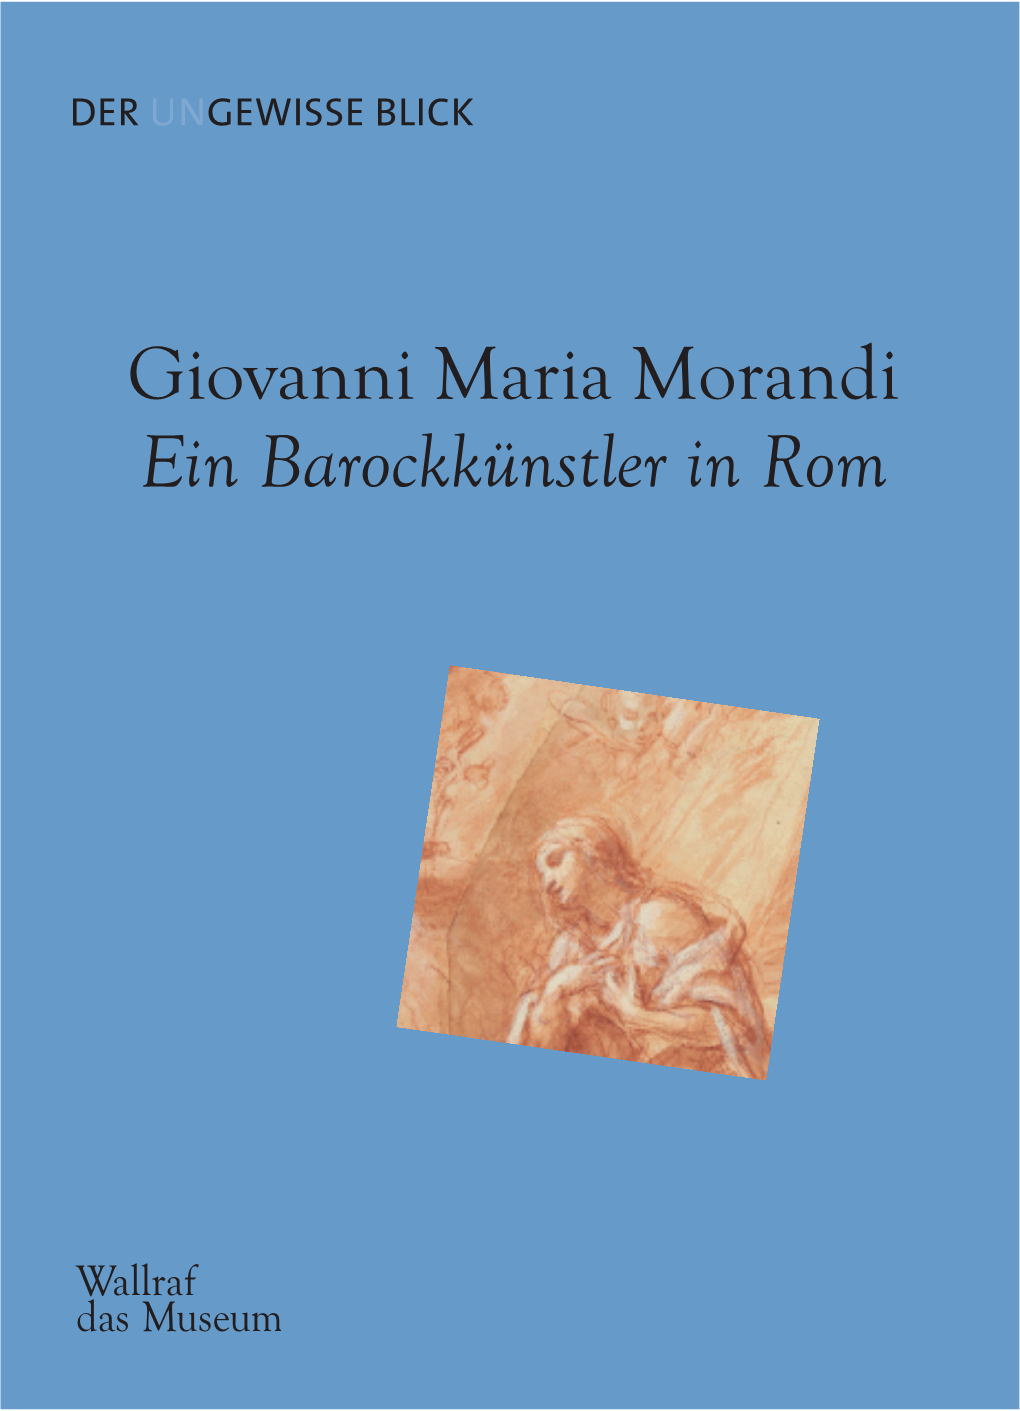 Giovanni Maria Morandi. Ein Barockkünstler in Rom